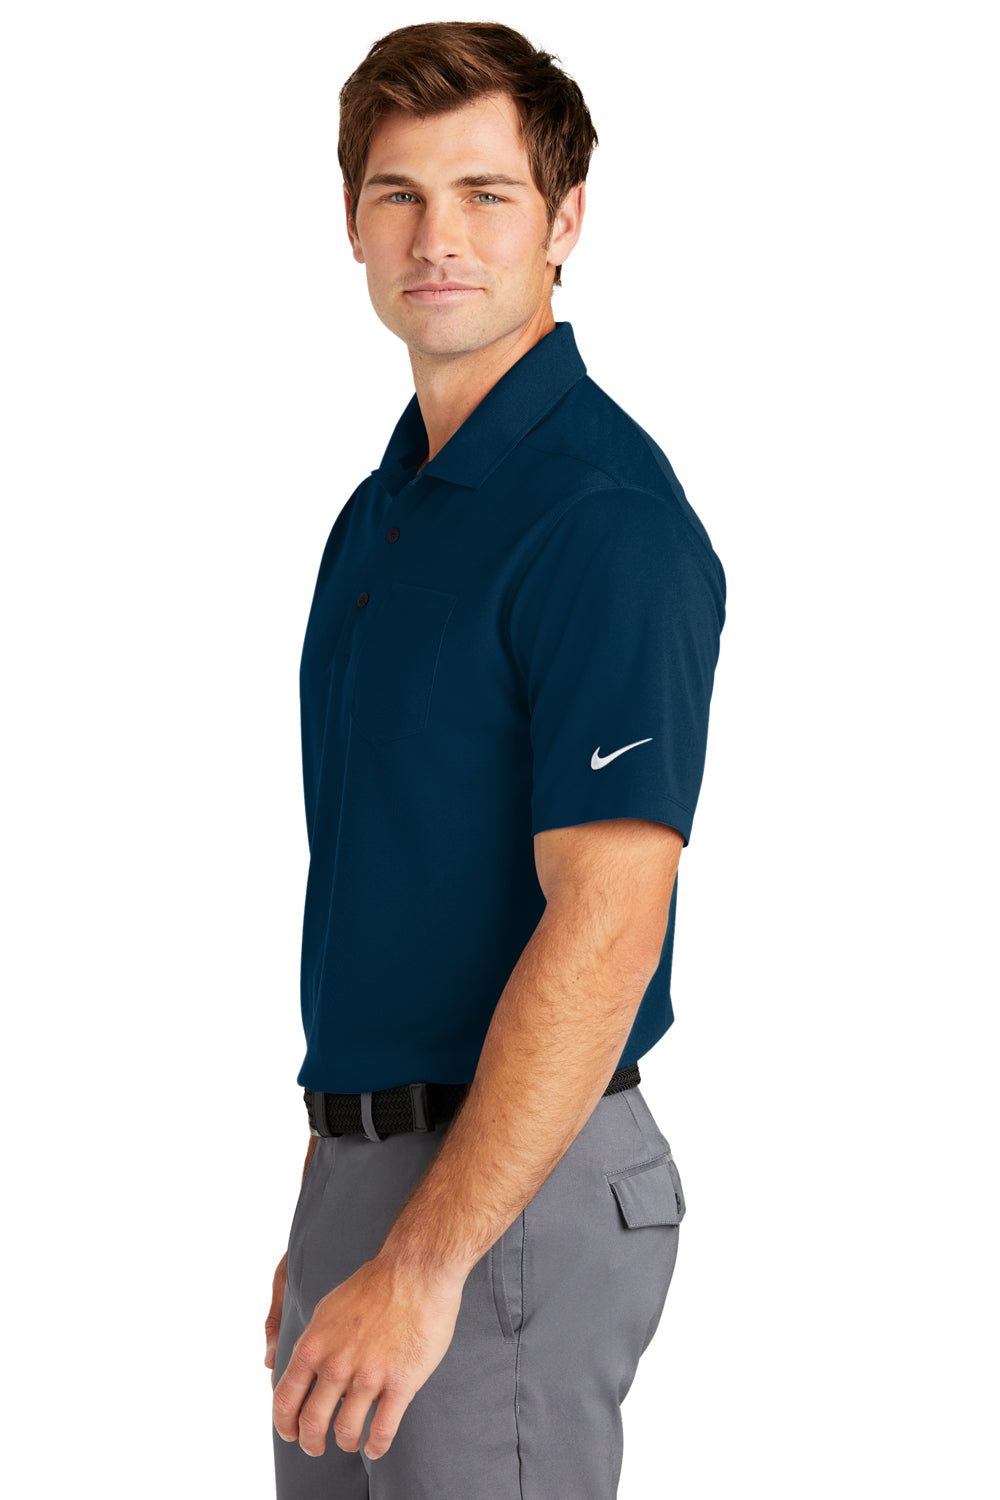 Nike NKDC2103 Mens Dri-Fit Moisture Wicking Micro Pique 2.0 Short Sleeve Polo Shirt w/ Pocket Navy Blue Model Side